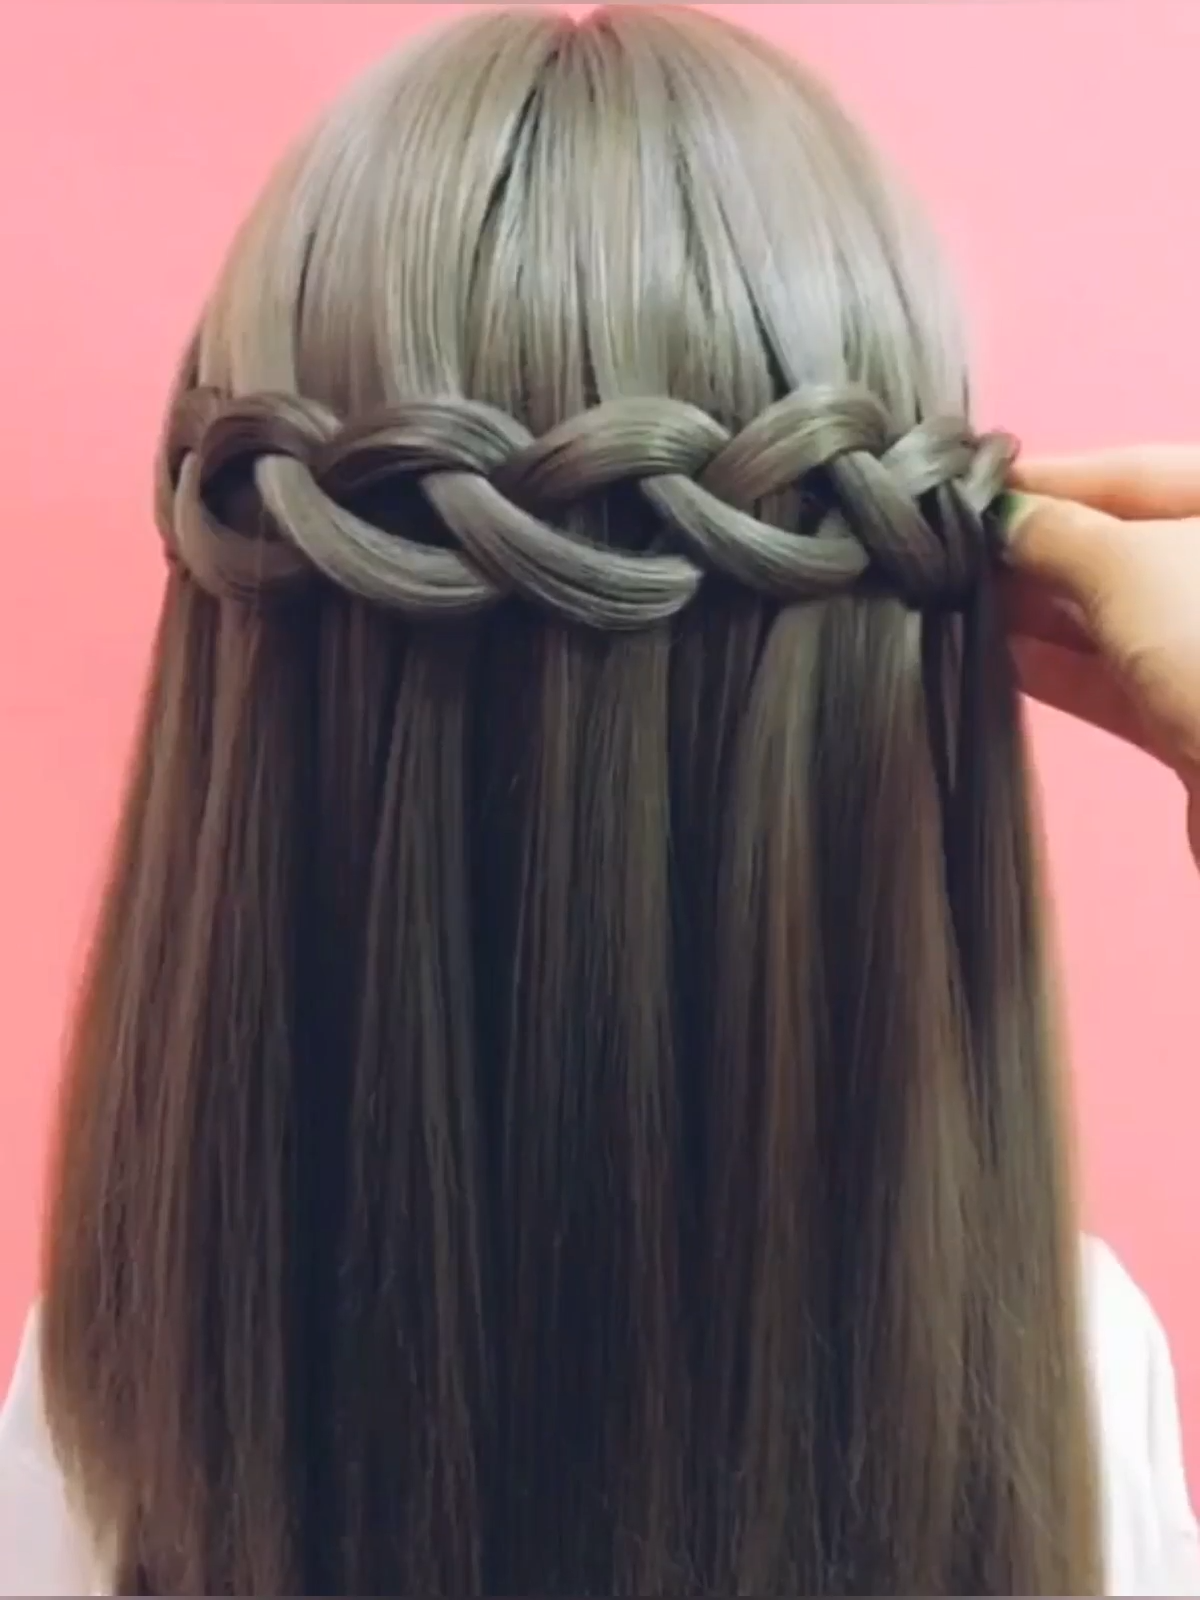 25+ cute and easy hairstyles | braided hairstyles | hair tutorials videos -   24 hairstyles Videos women ideas